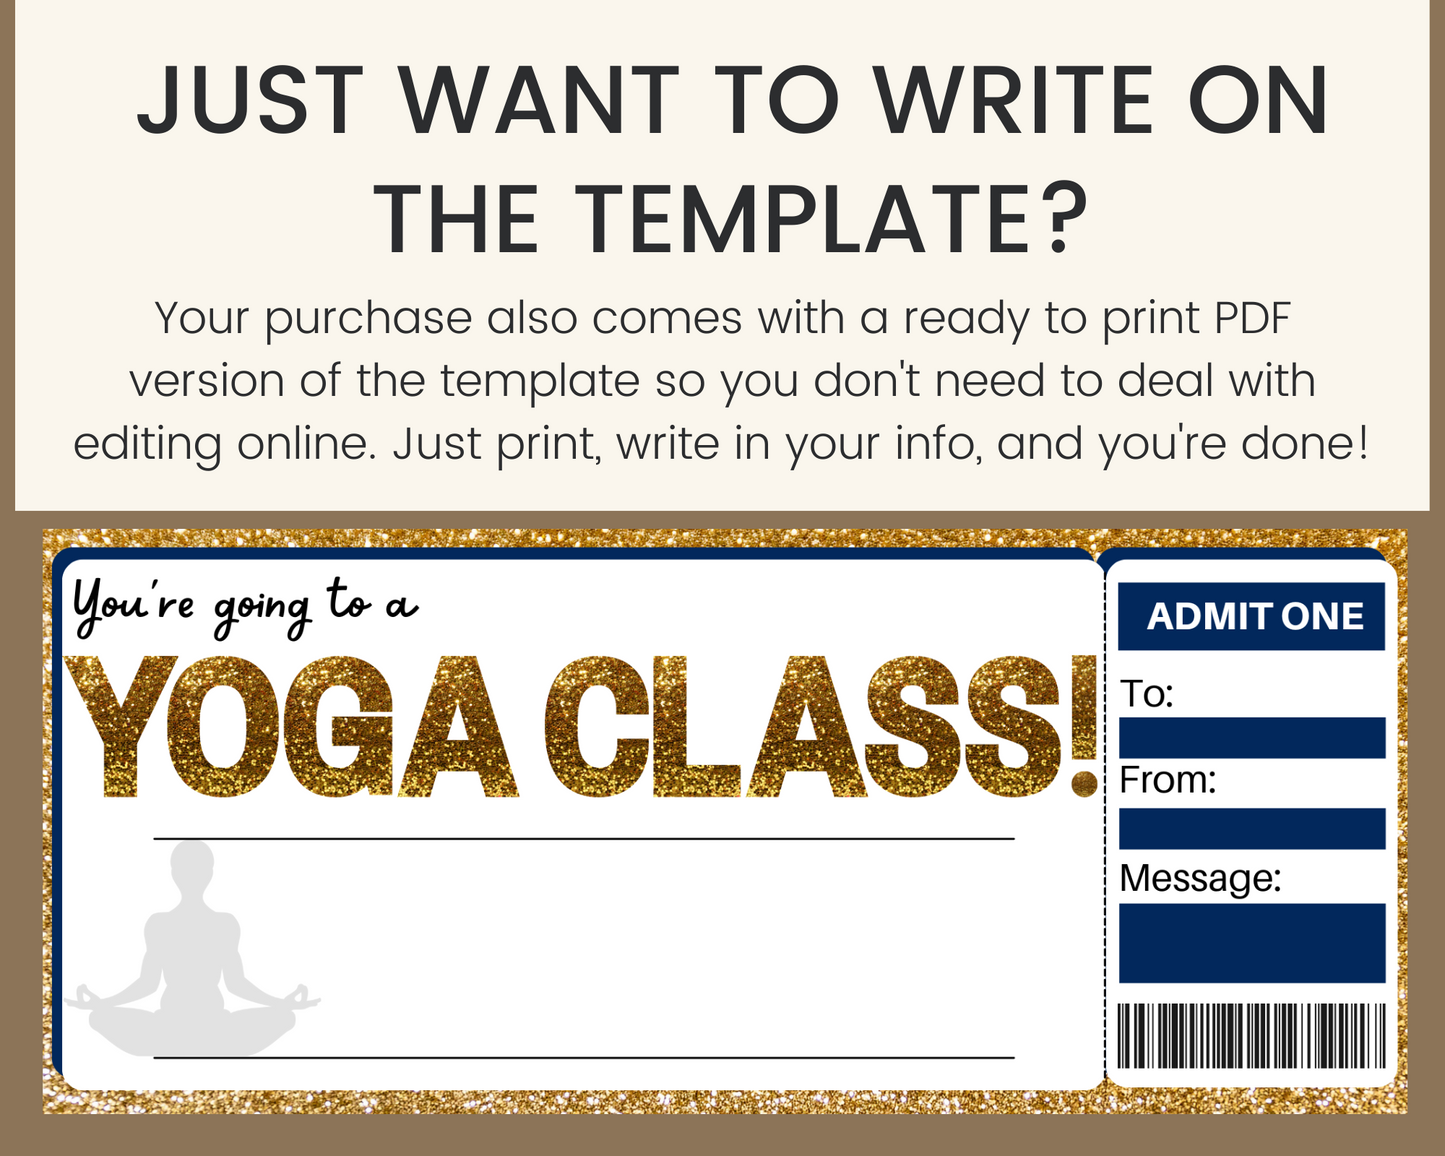 Yoga Class Gift Ticket